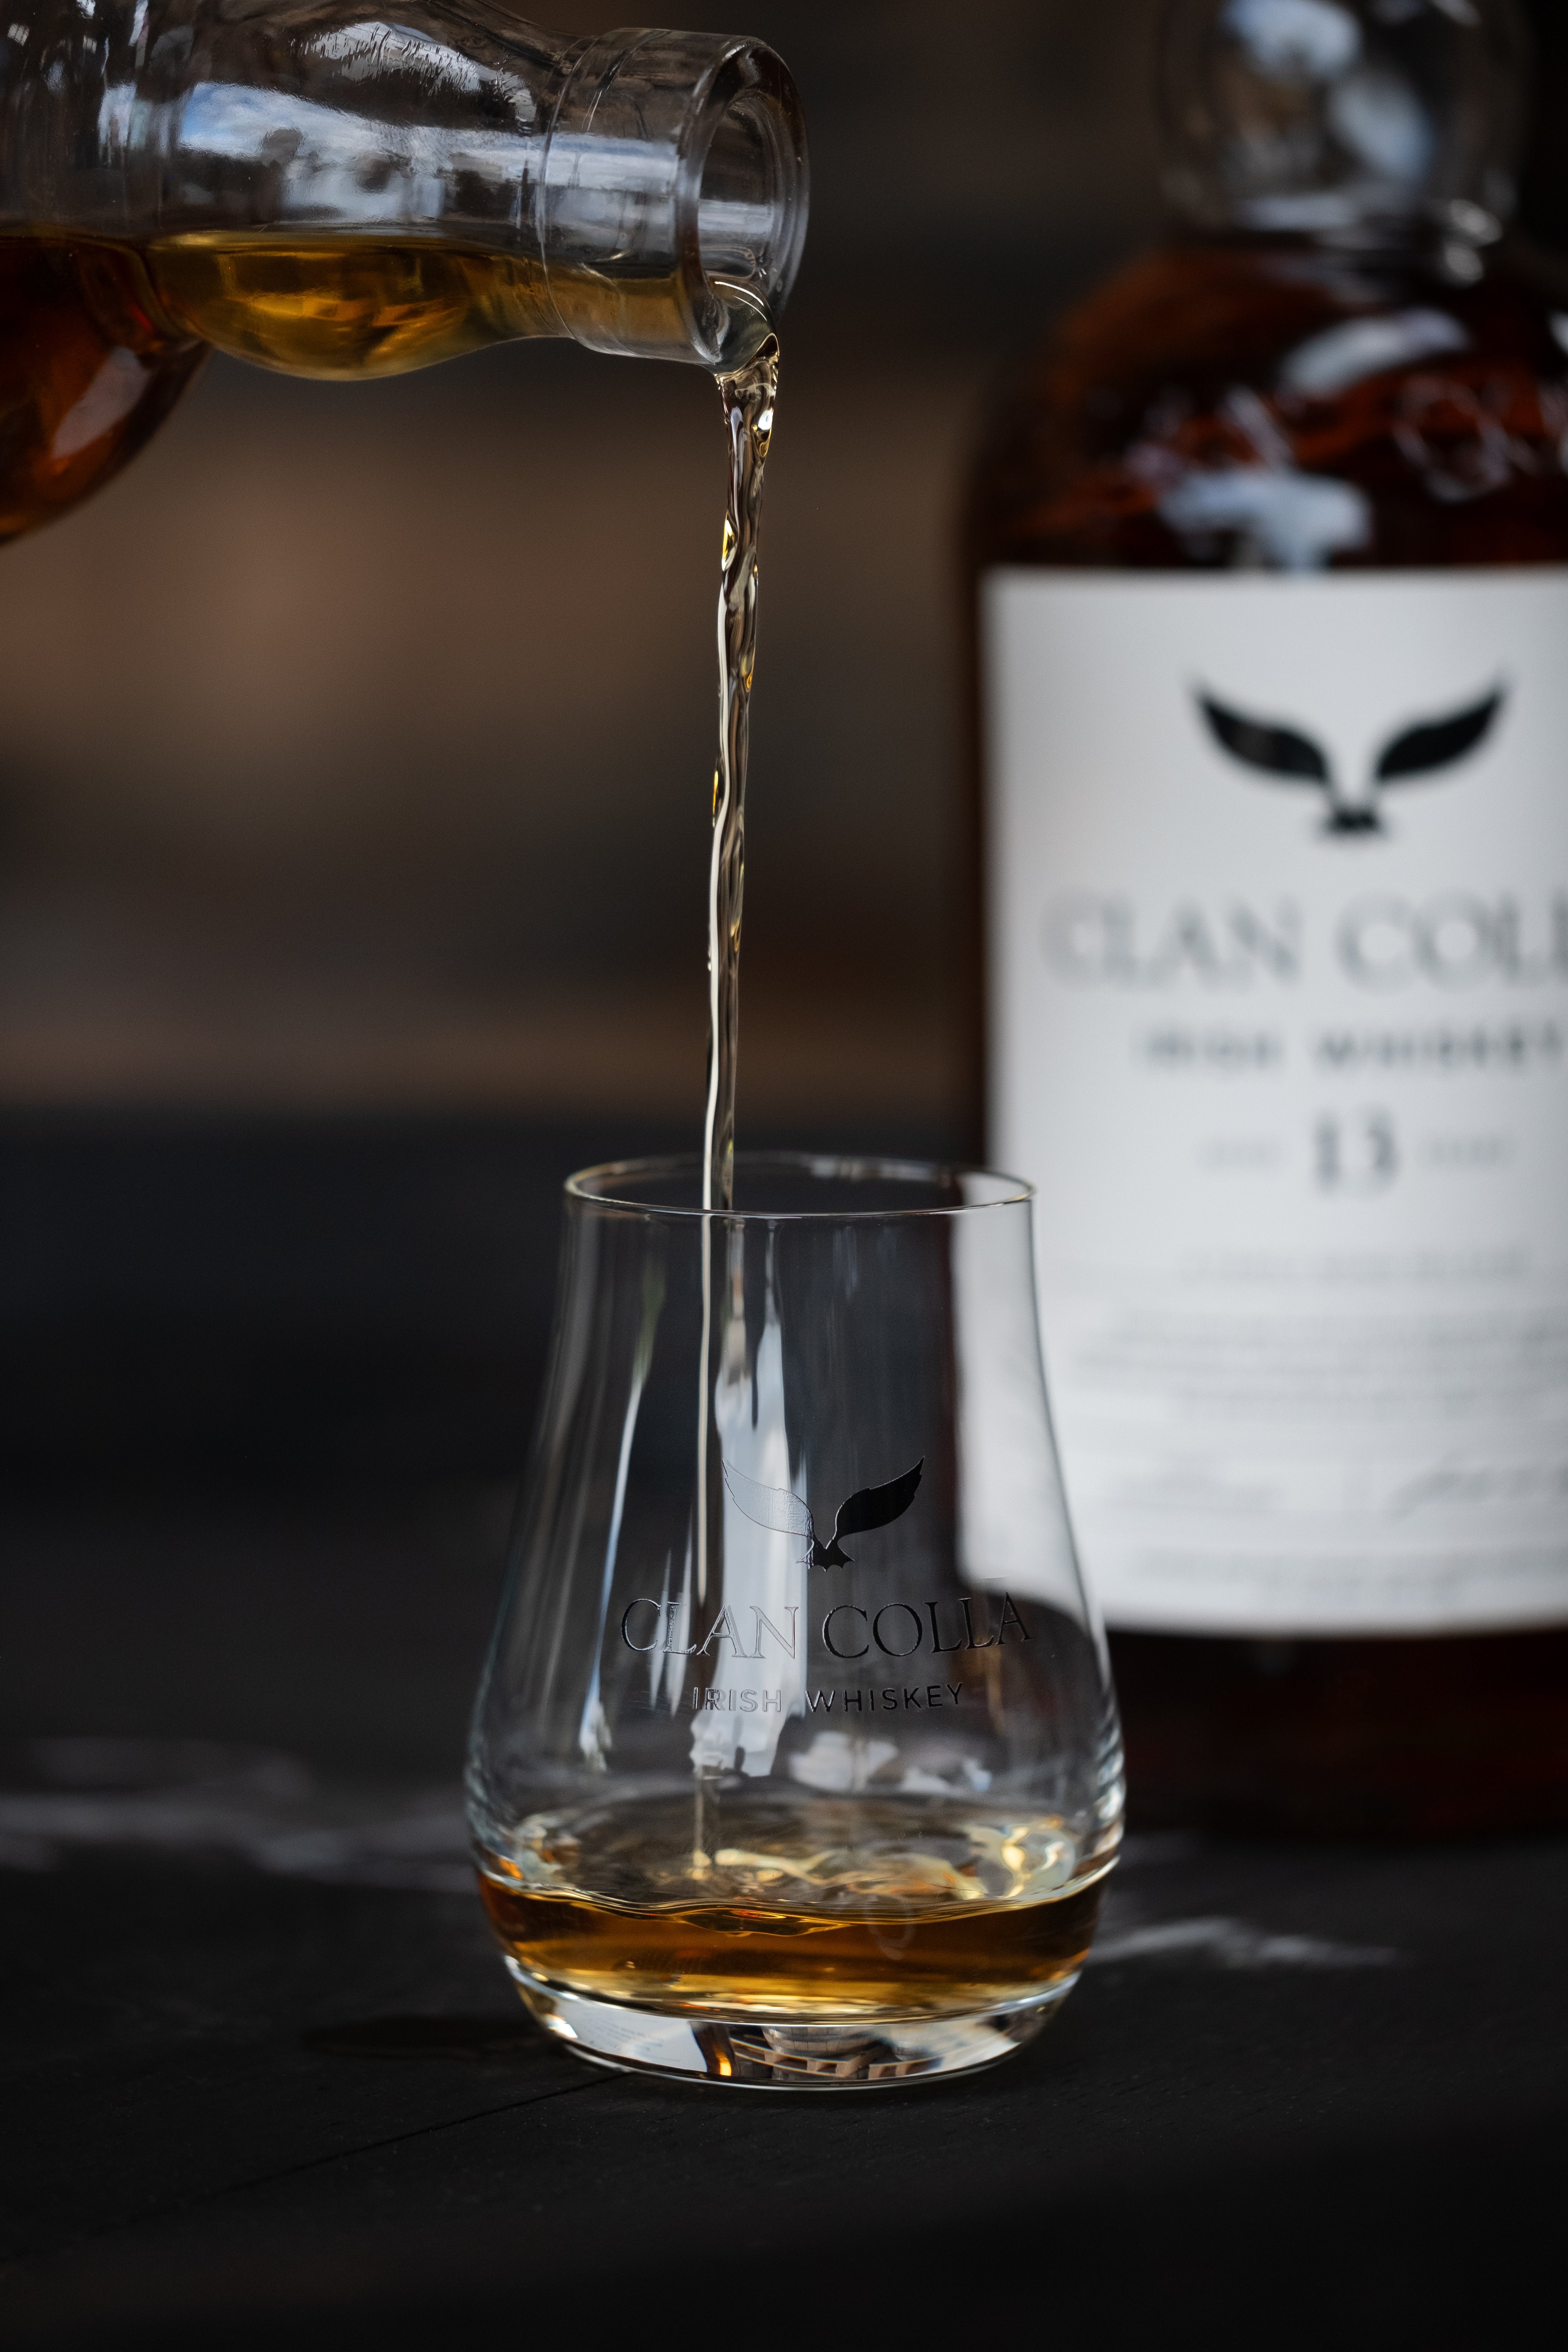 Clan Colla Irish Whiskey 13 YO